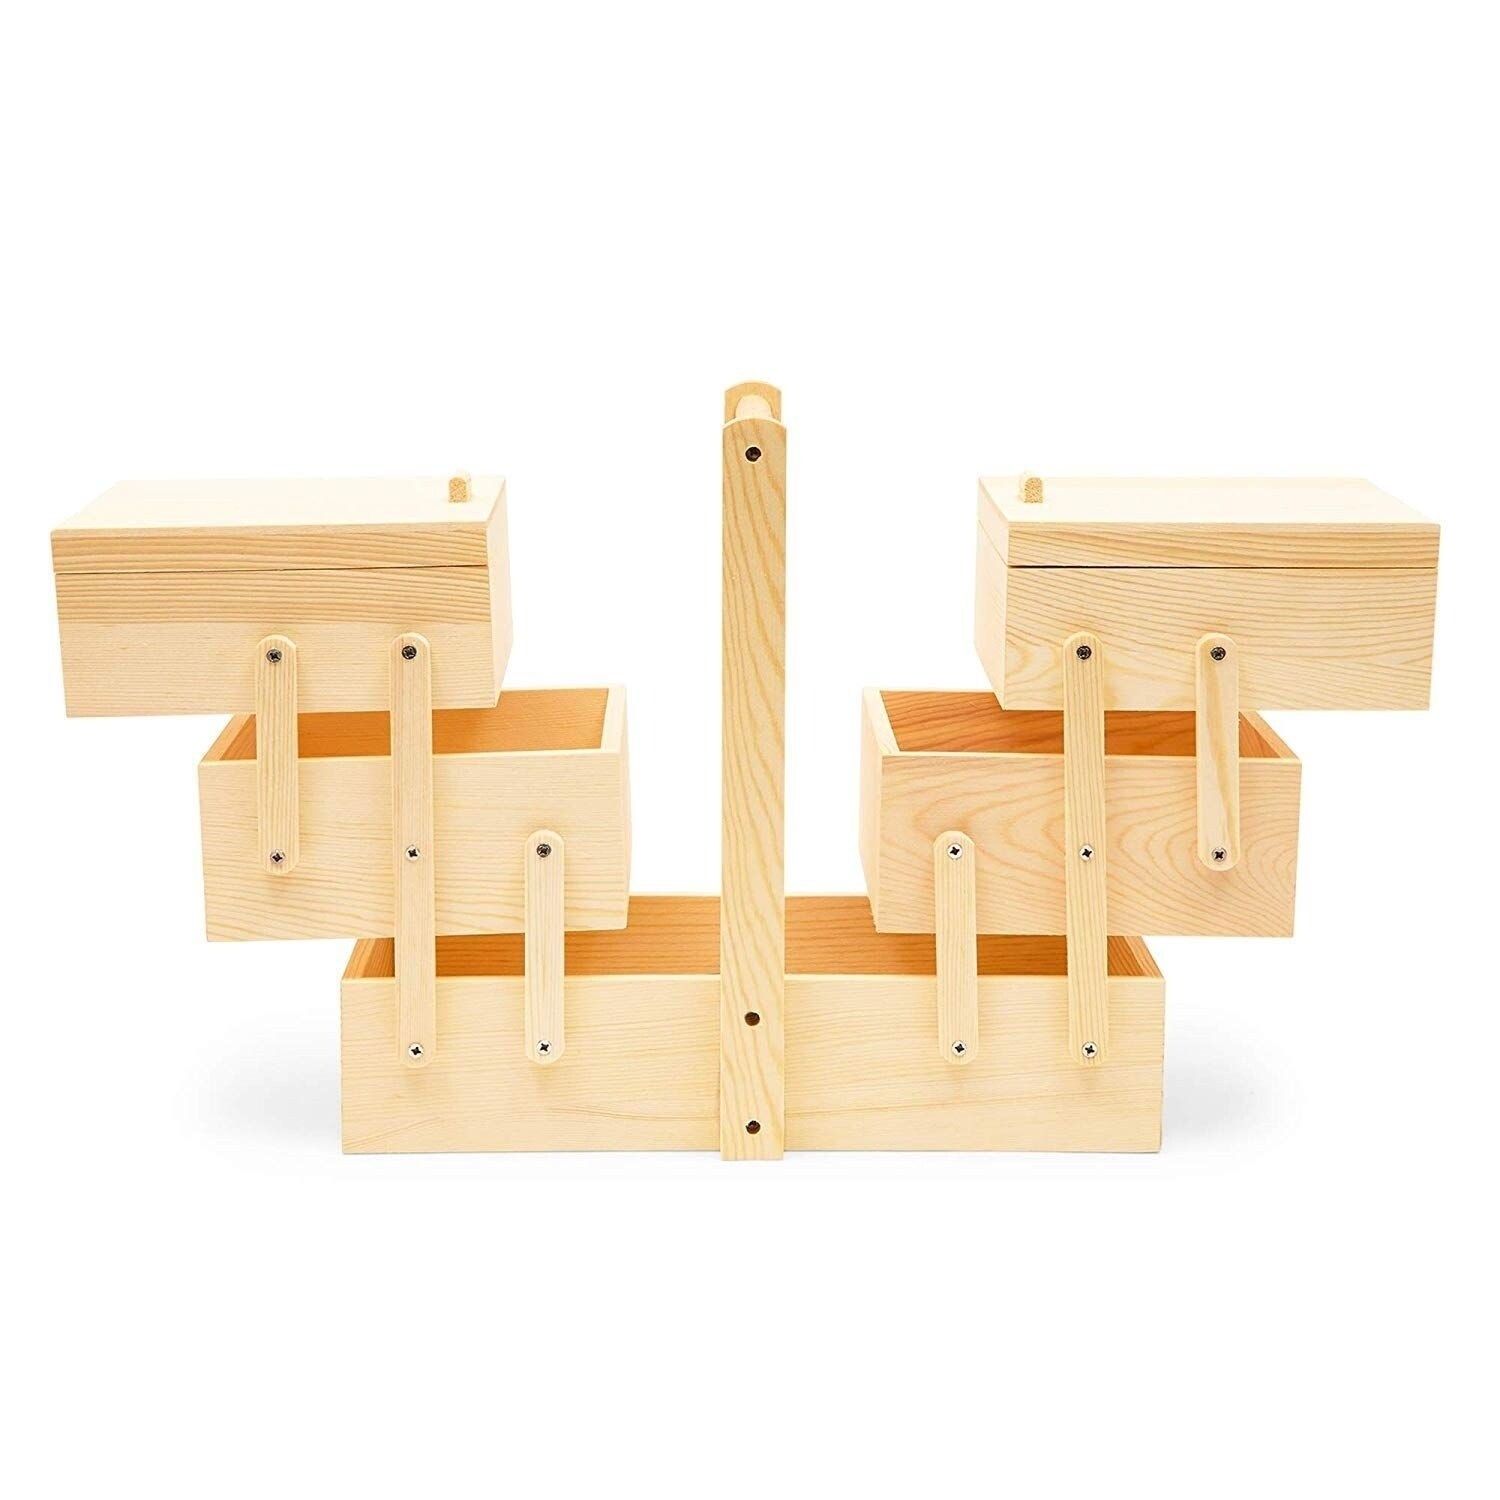 Wood Sewing Box 3 Tier Organizer for Storage Craft Tools Kits